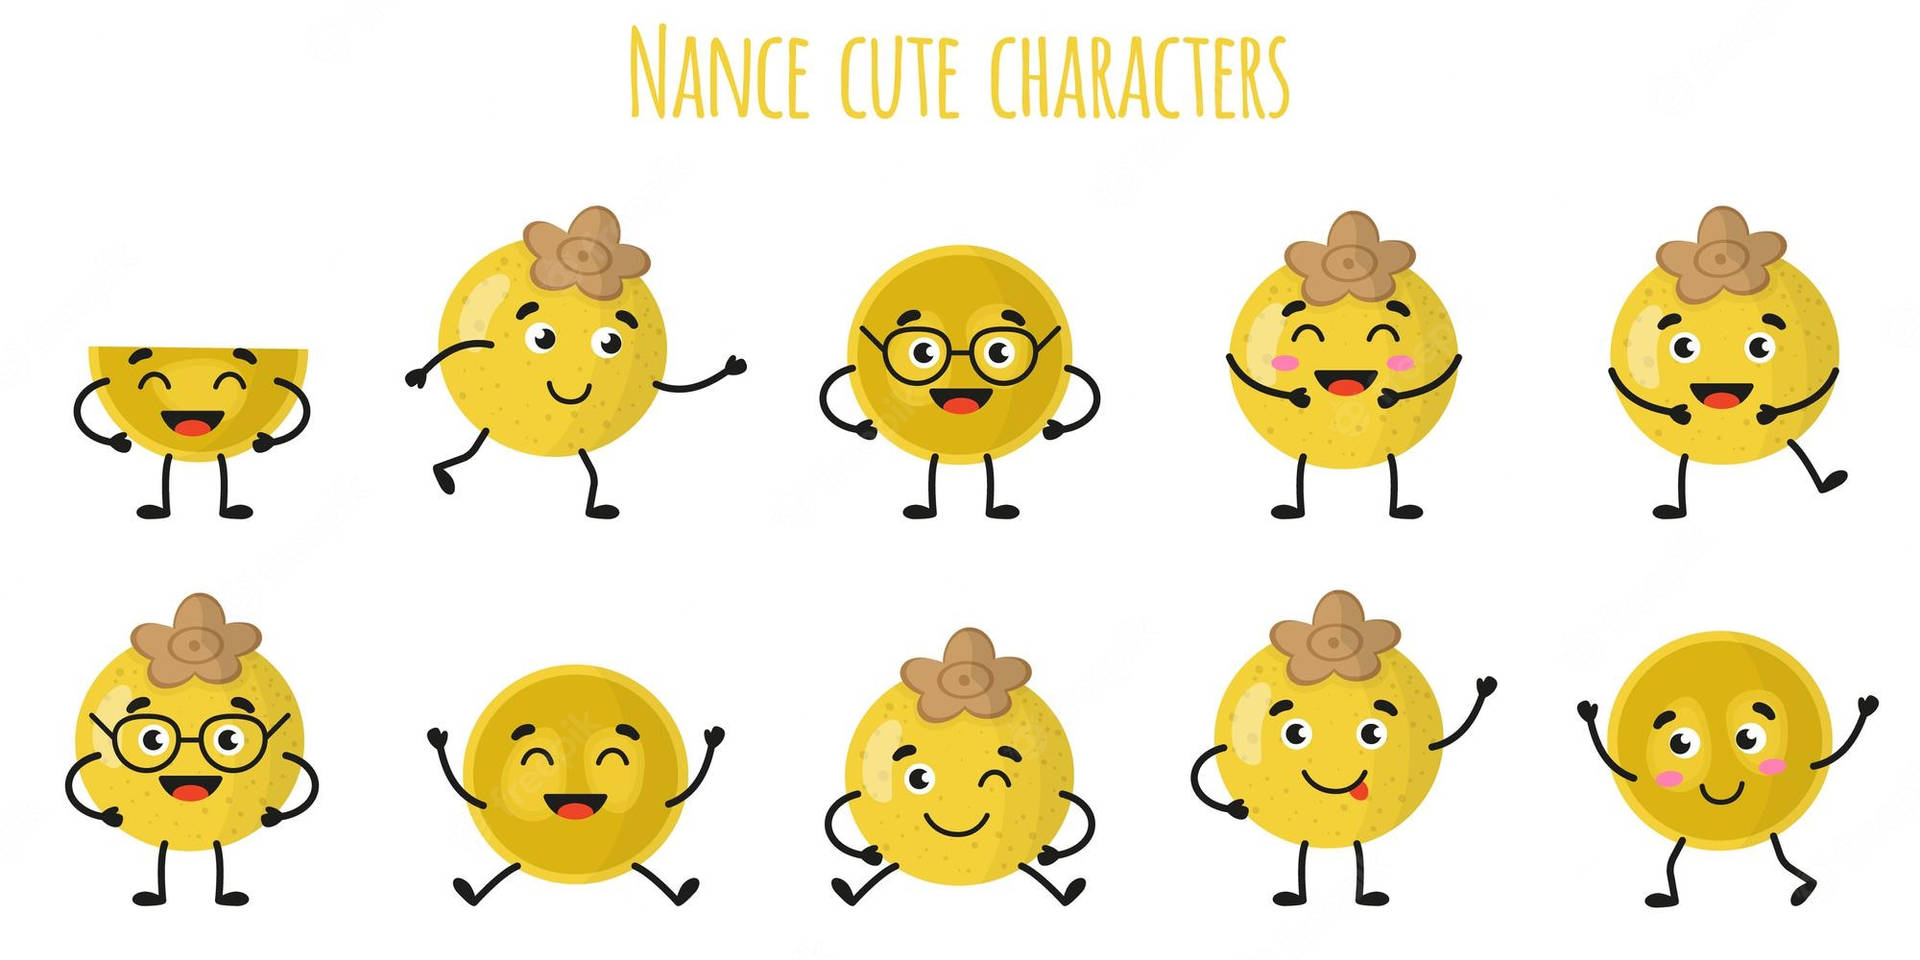 Nance Cute Characters Wallpaper